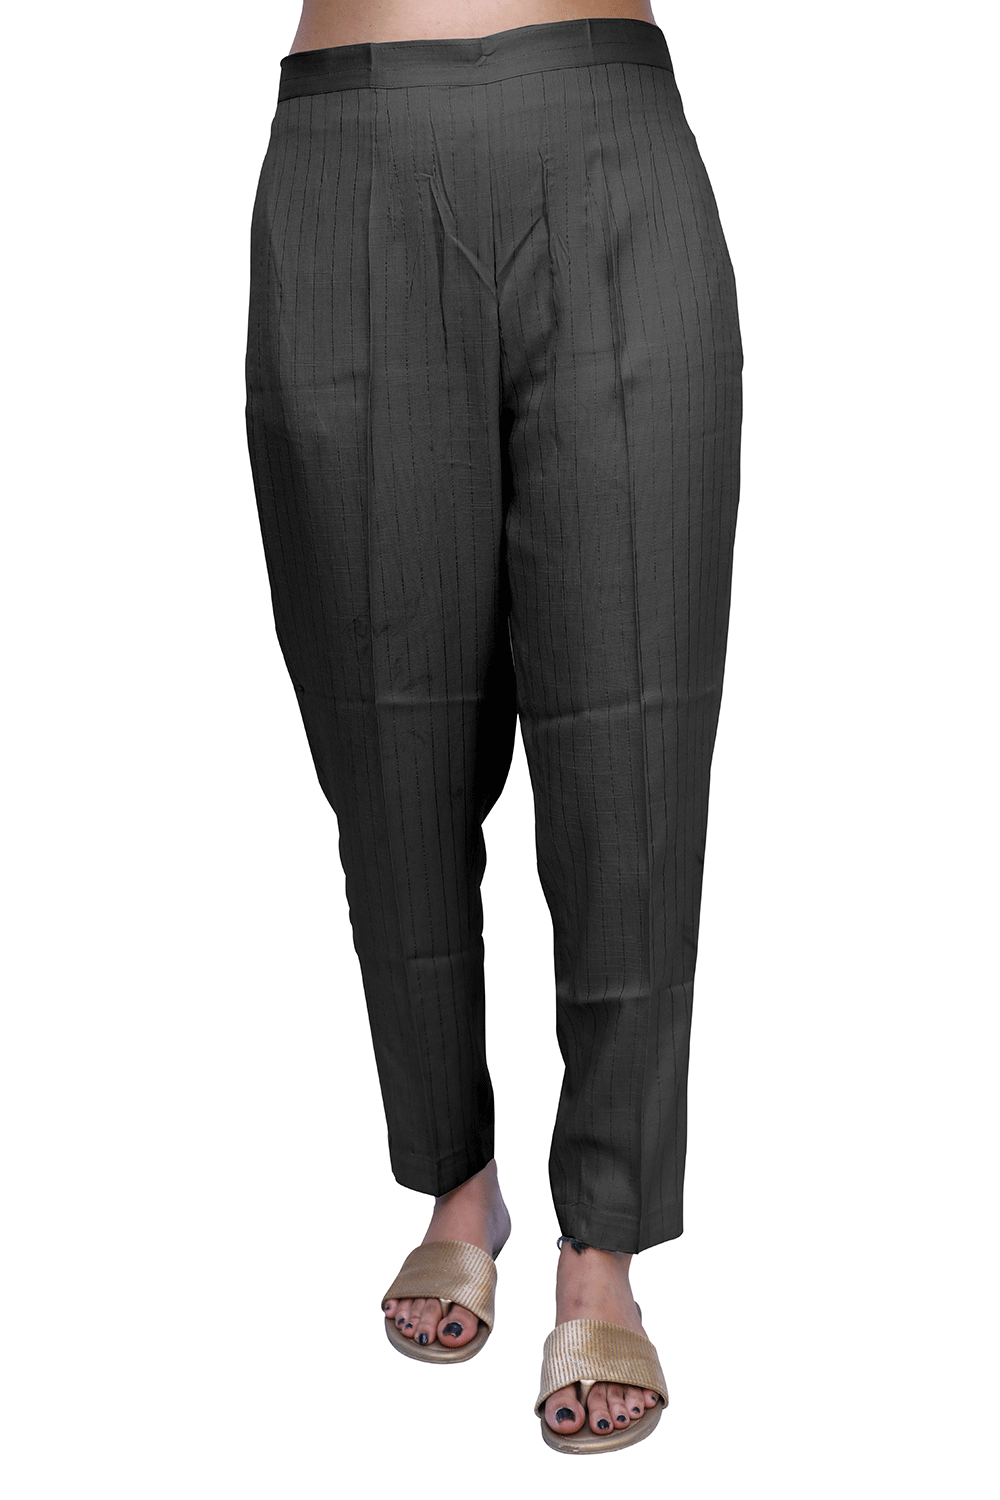 Regular Fit Women Black Rayon Lurex Print Trousers | S3BP779